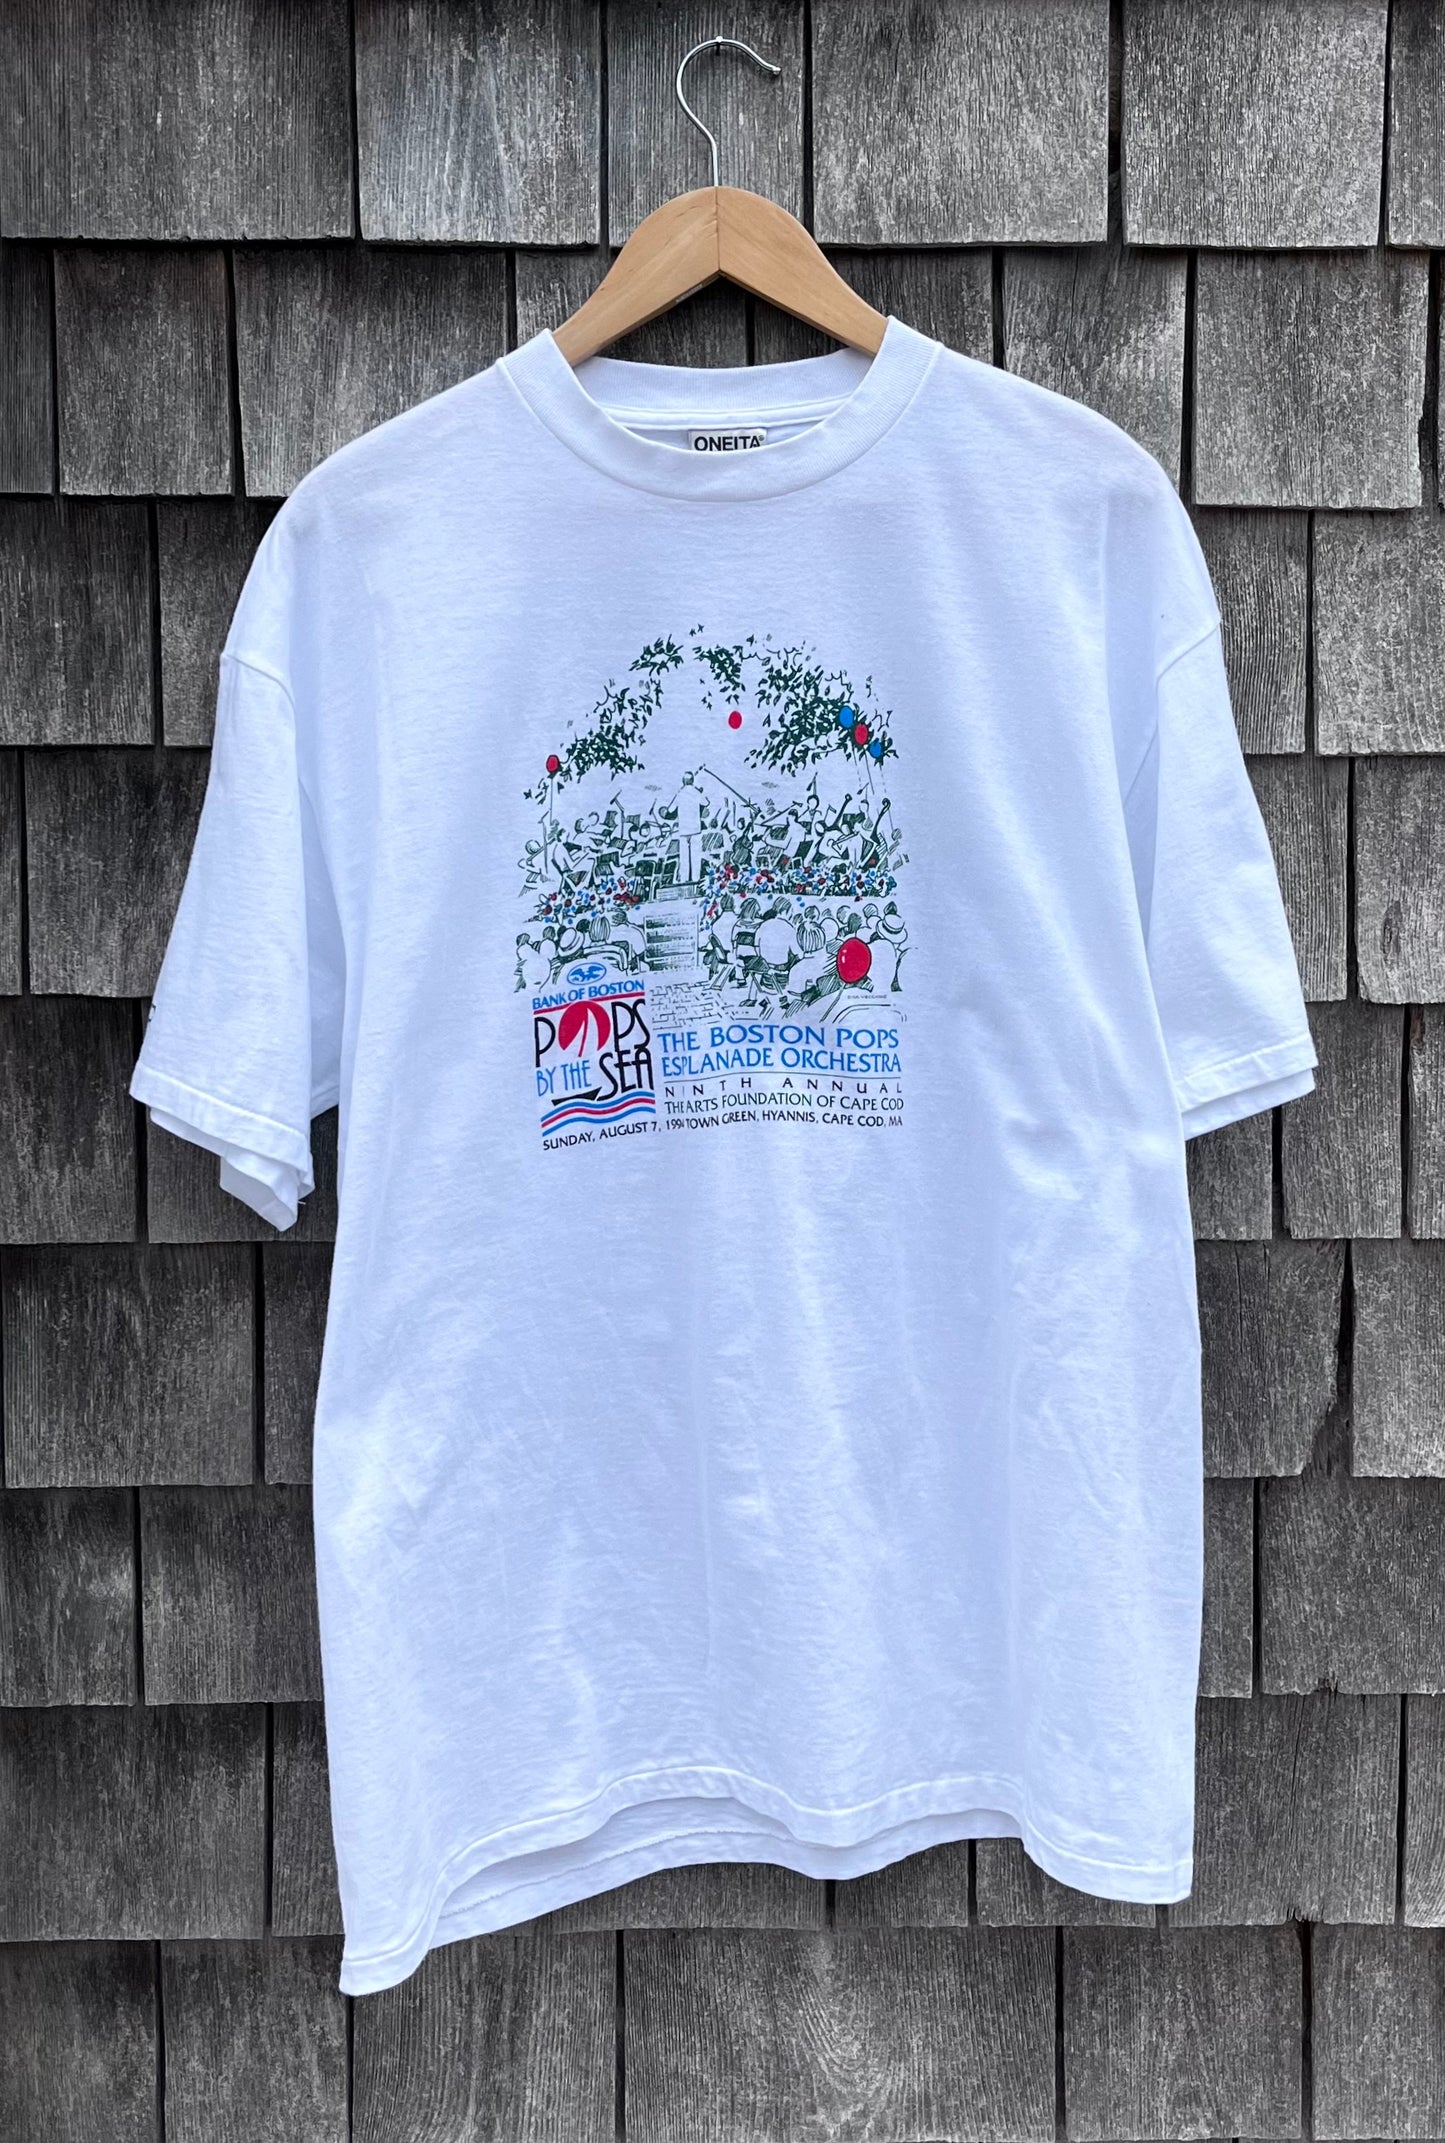 1994 Boston Pops Esplanade Orchestra Cape Cod Concert T-Shirt